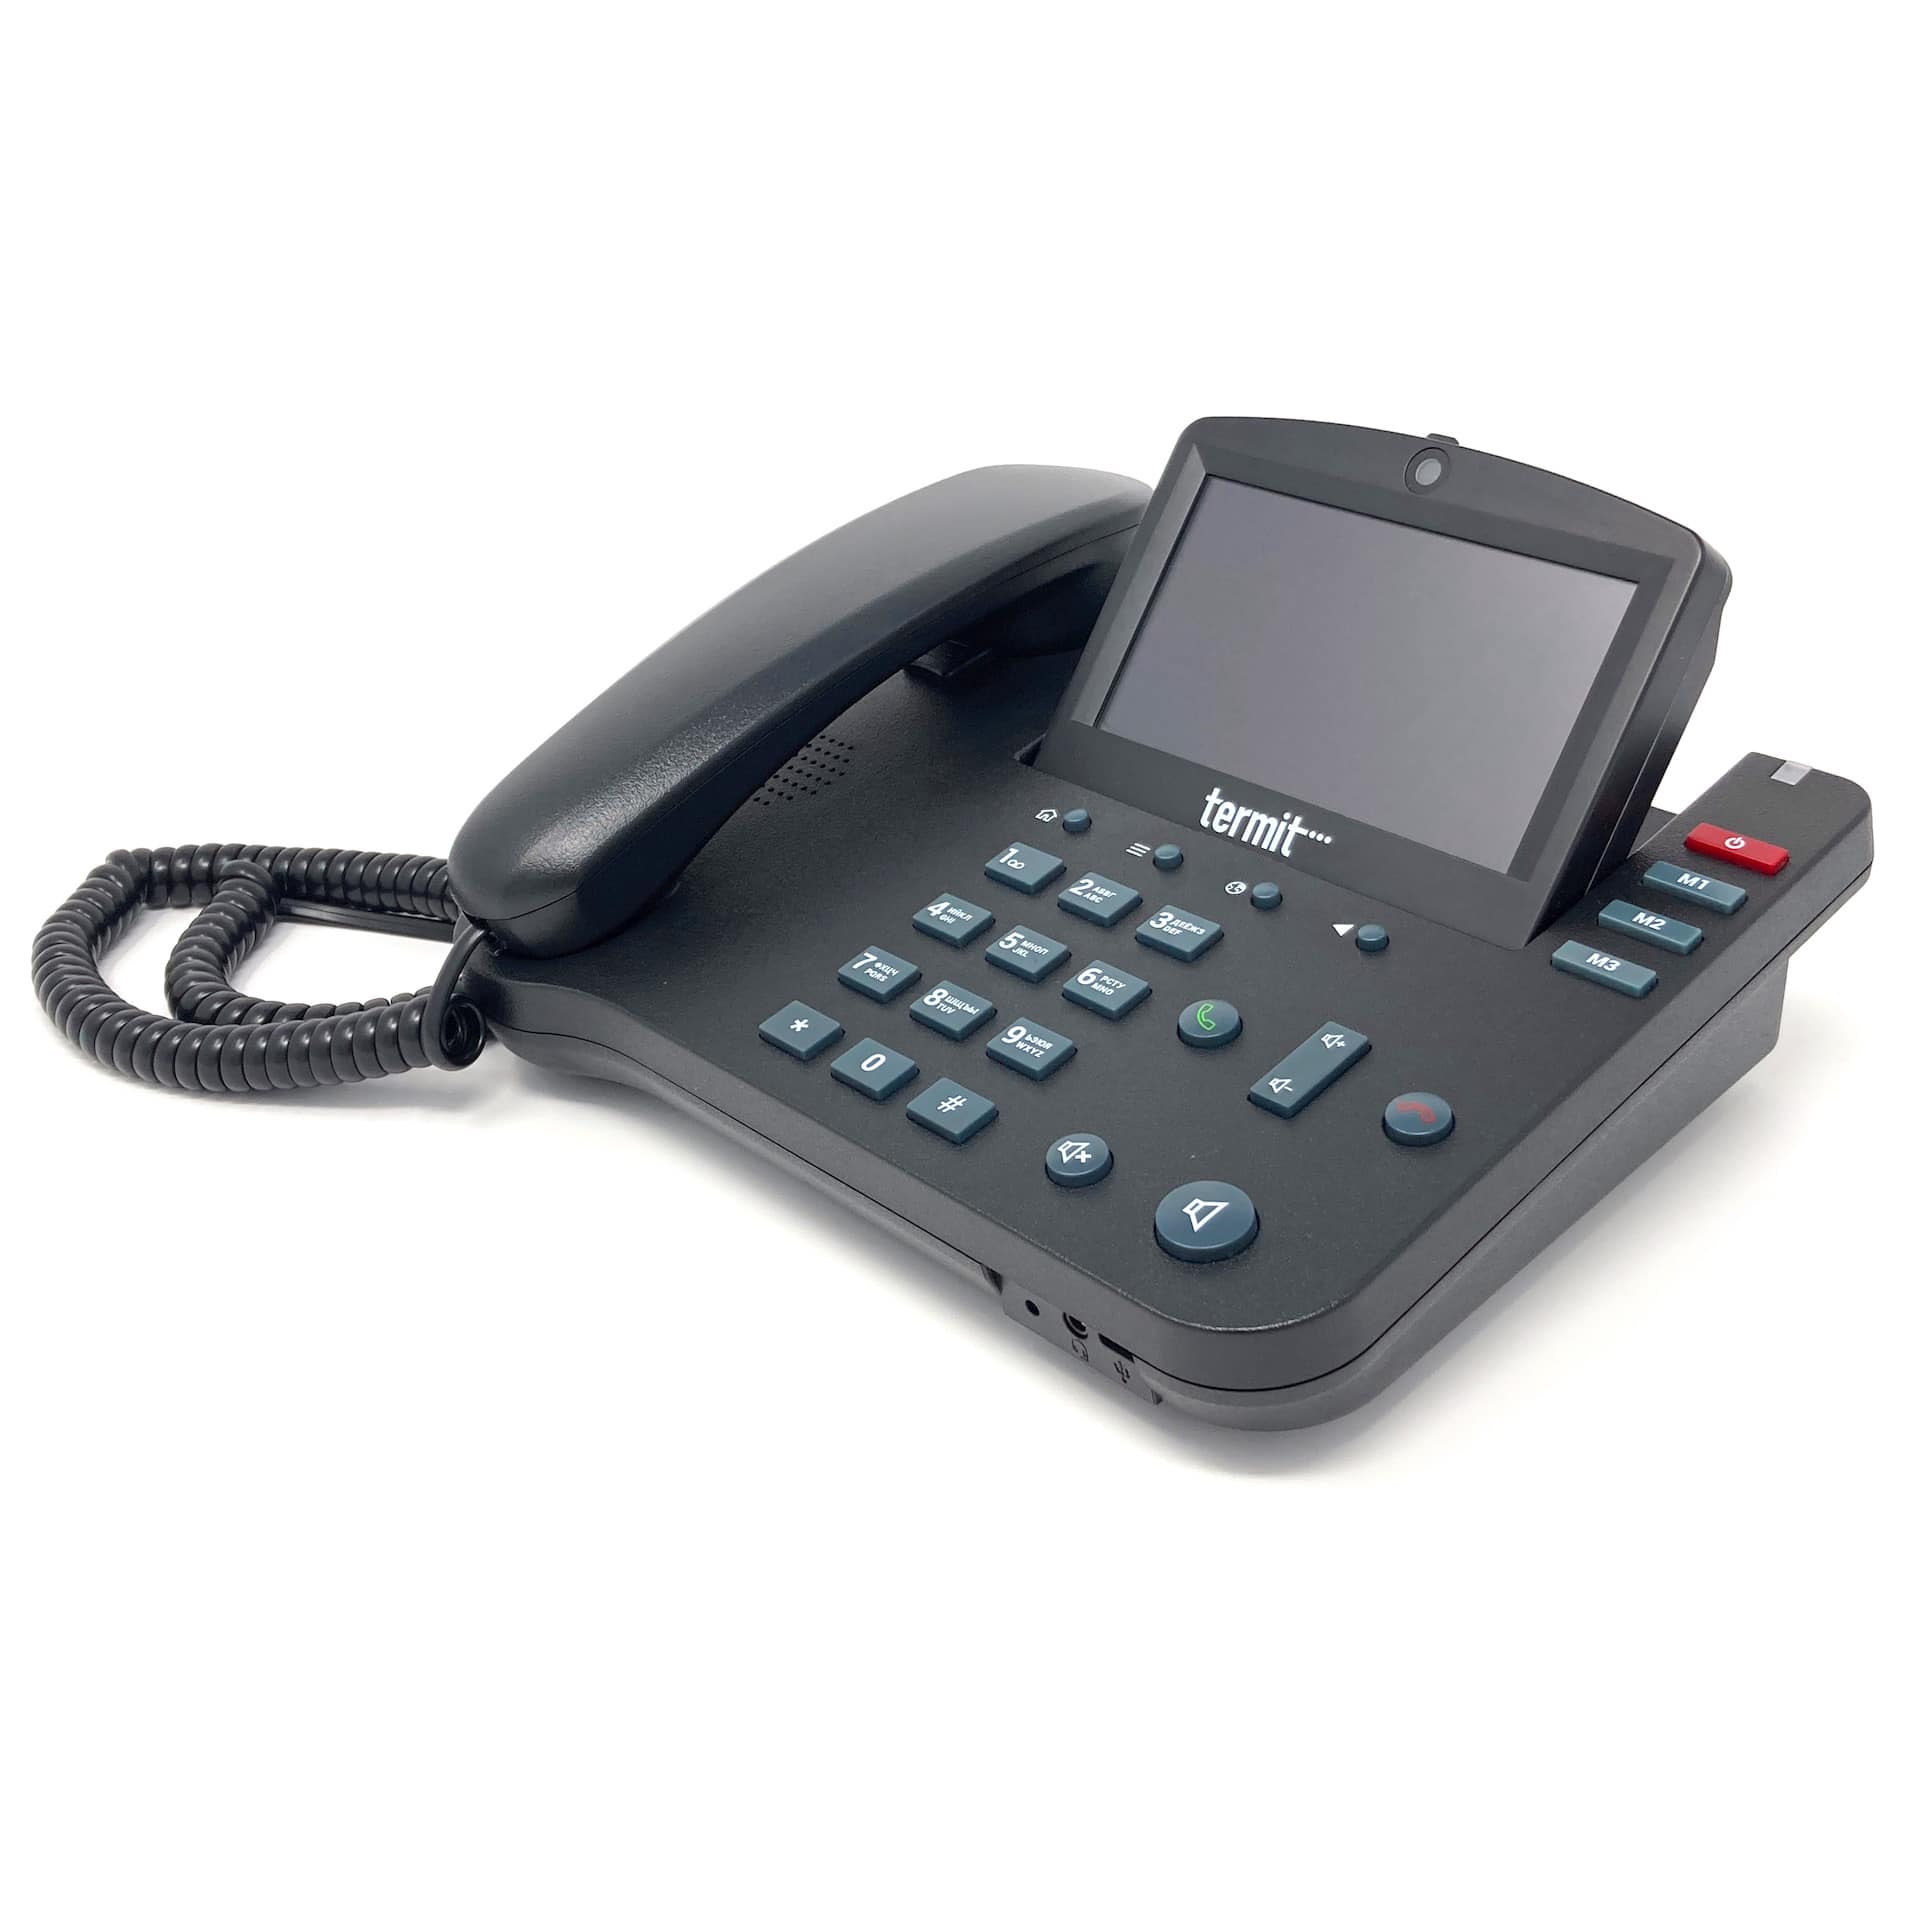 Стационарная мобильная связь. Termit FIXPHONE v2. Телефон Termit FIXPHONE GSM. Стационарный сотовый телефон Termit FIXPHONE. Стационарный сотовый GSM телефон Termit FIXPHONE v2.